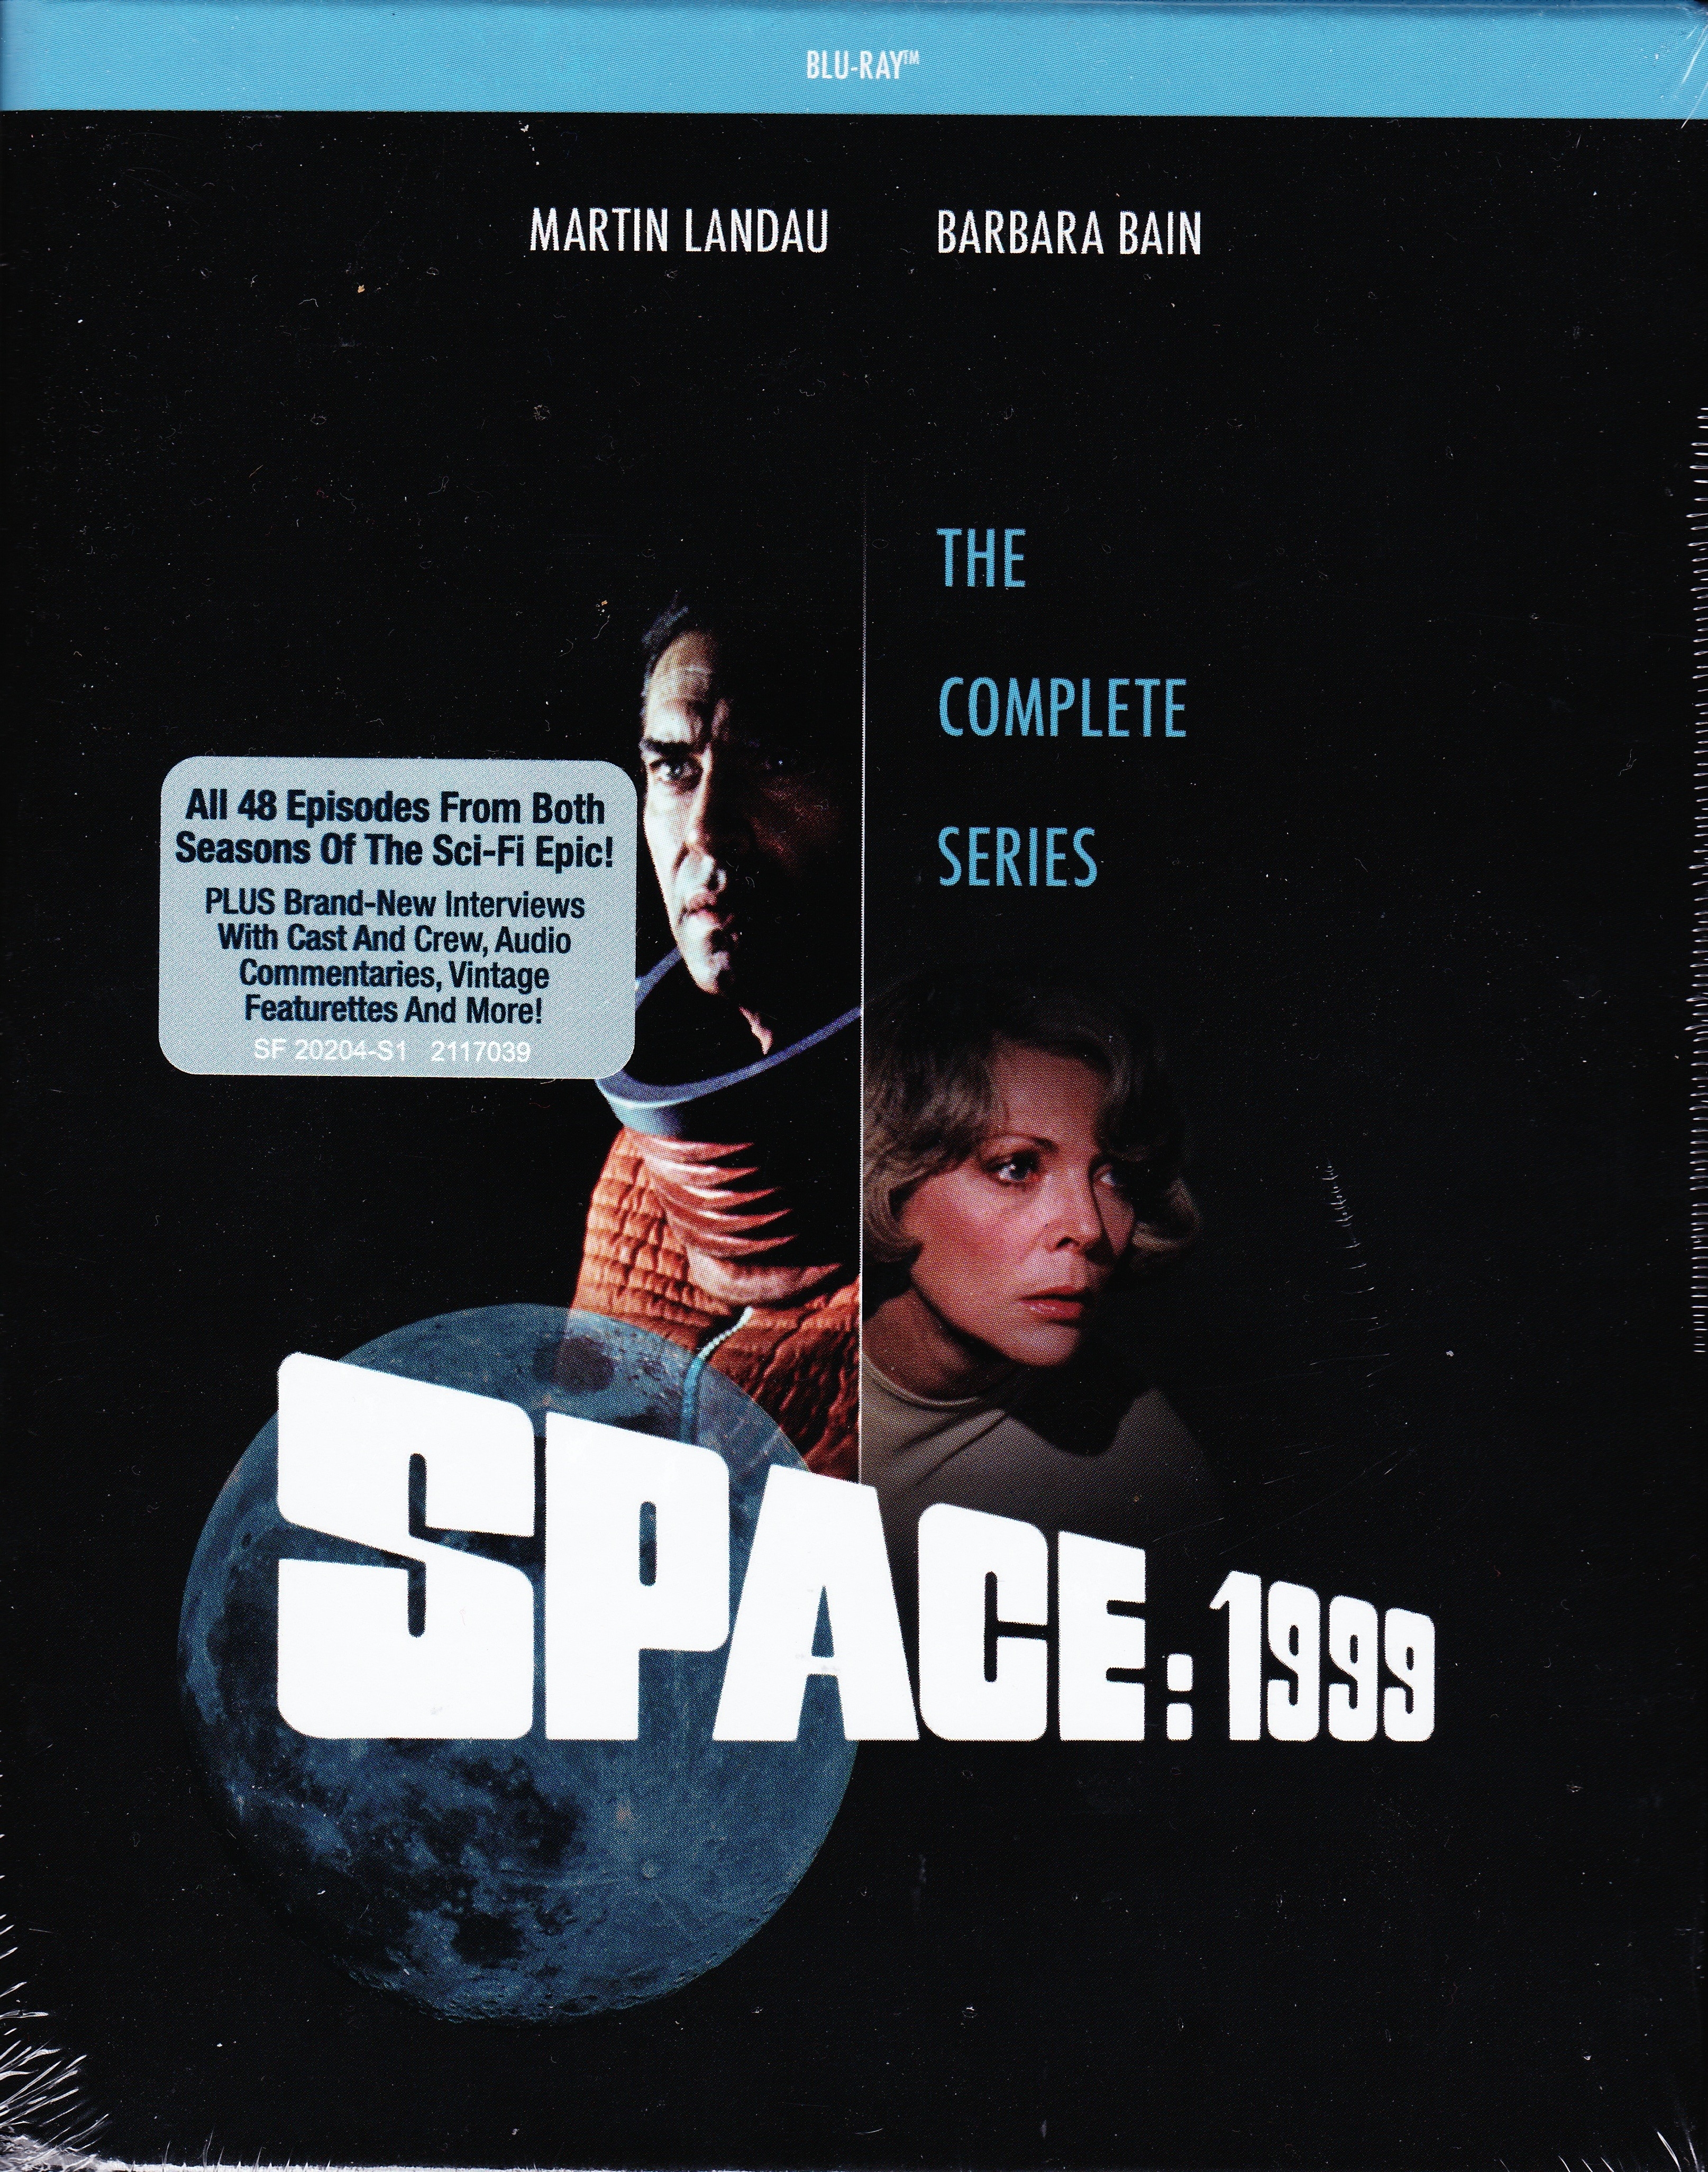 space 1999 cast